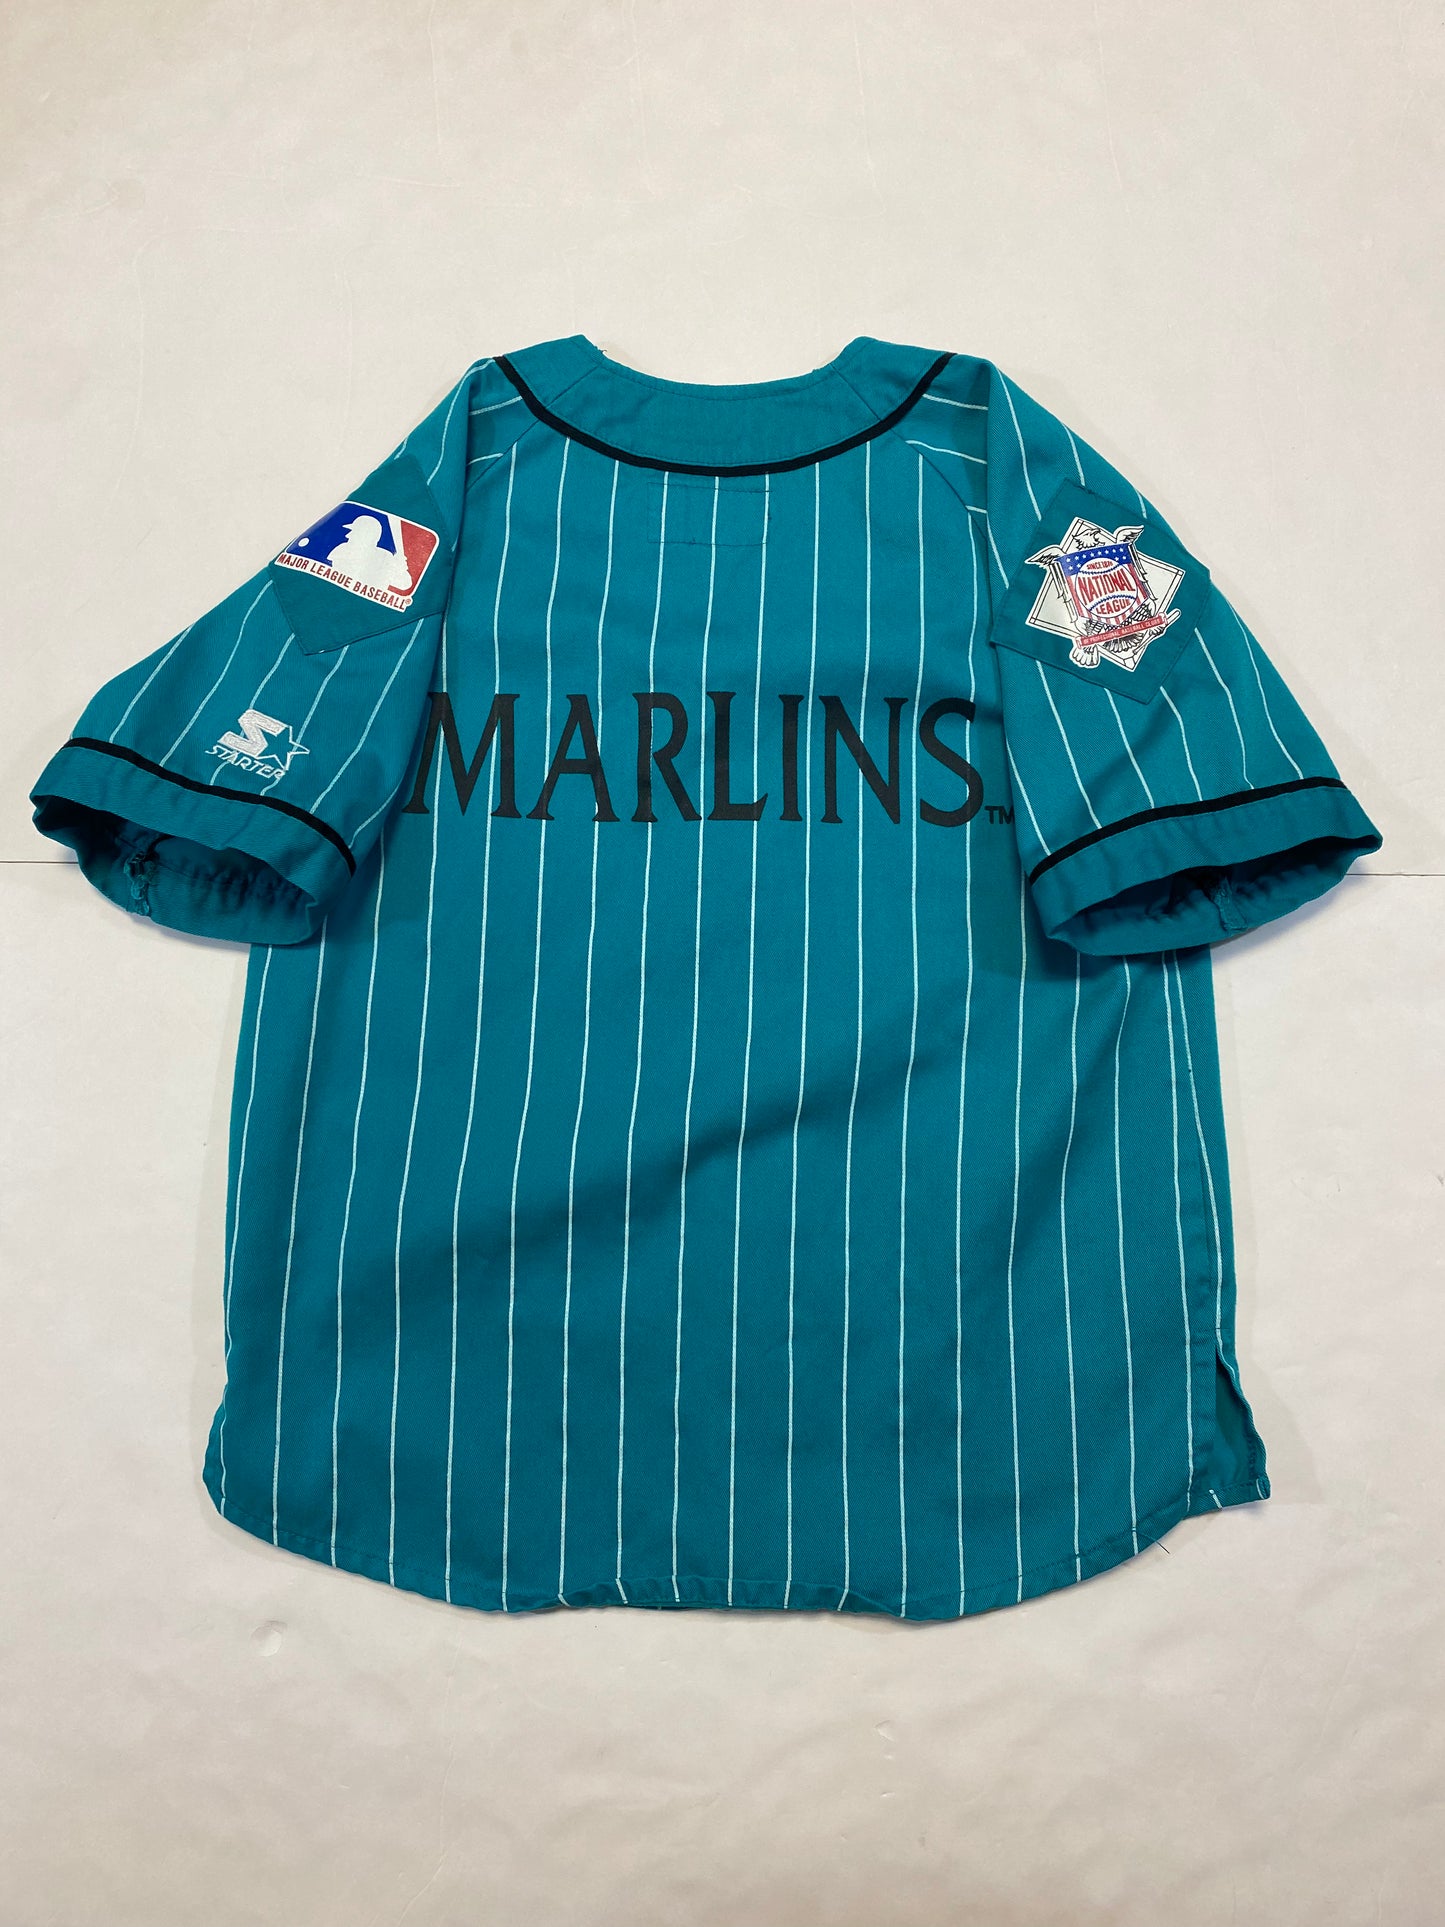 Youth Starter 1990’s Florida Marlins MLB Jersey